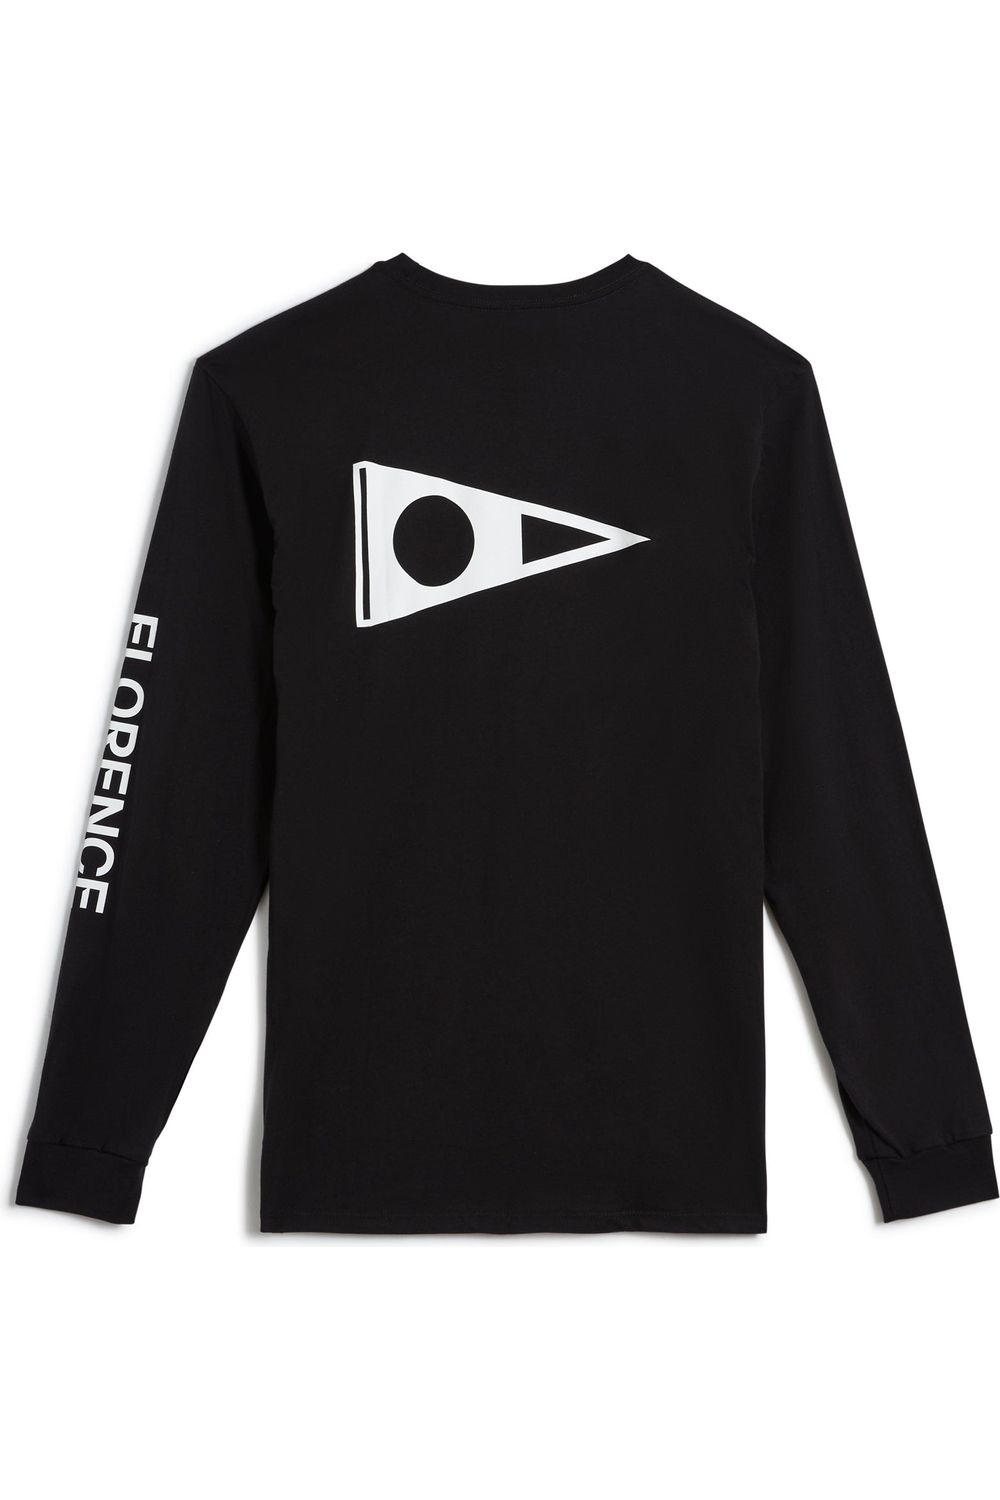 Florence Marine X Formula Long Sleeve T-Shirt Black